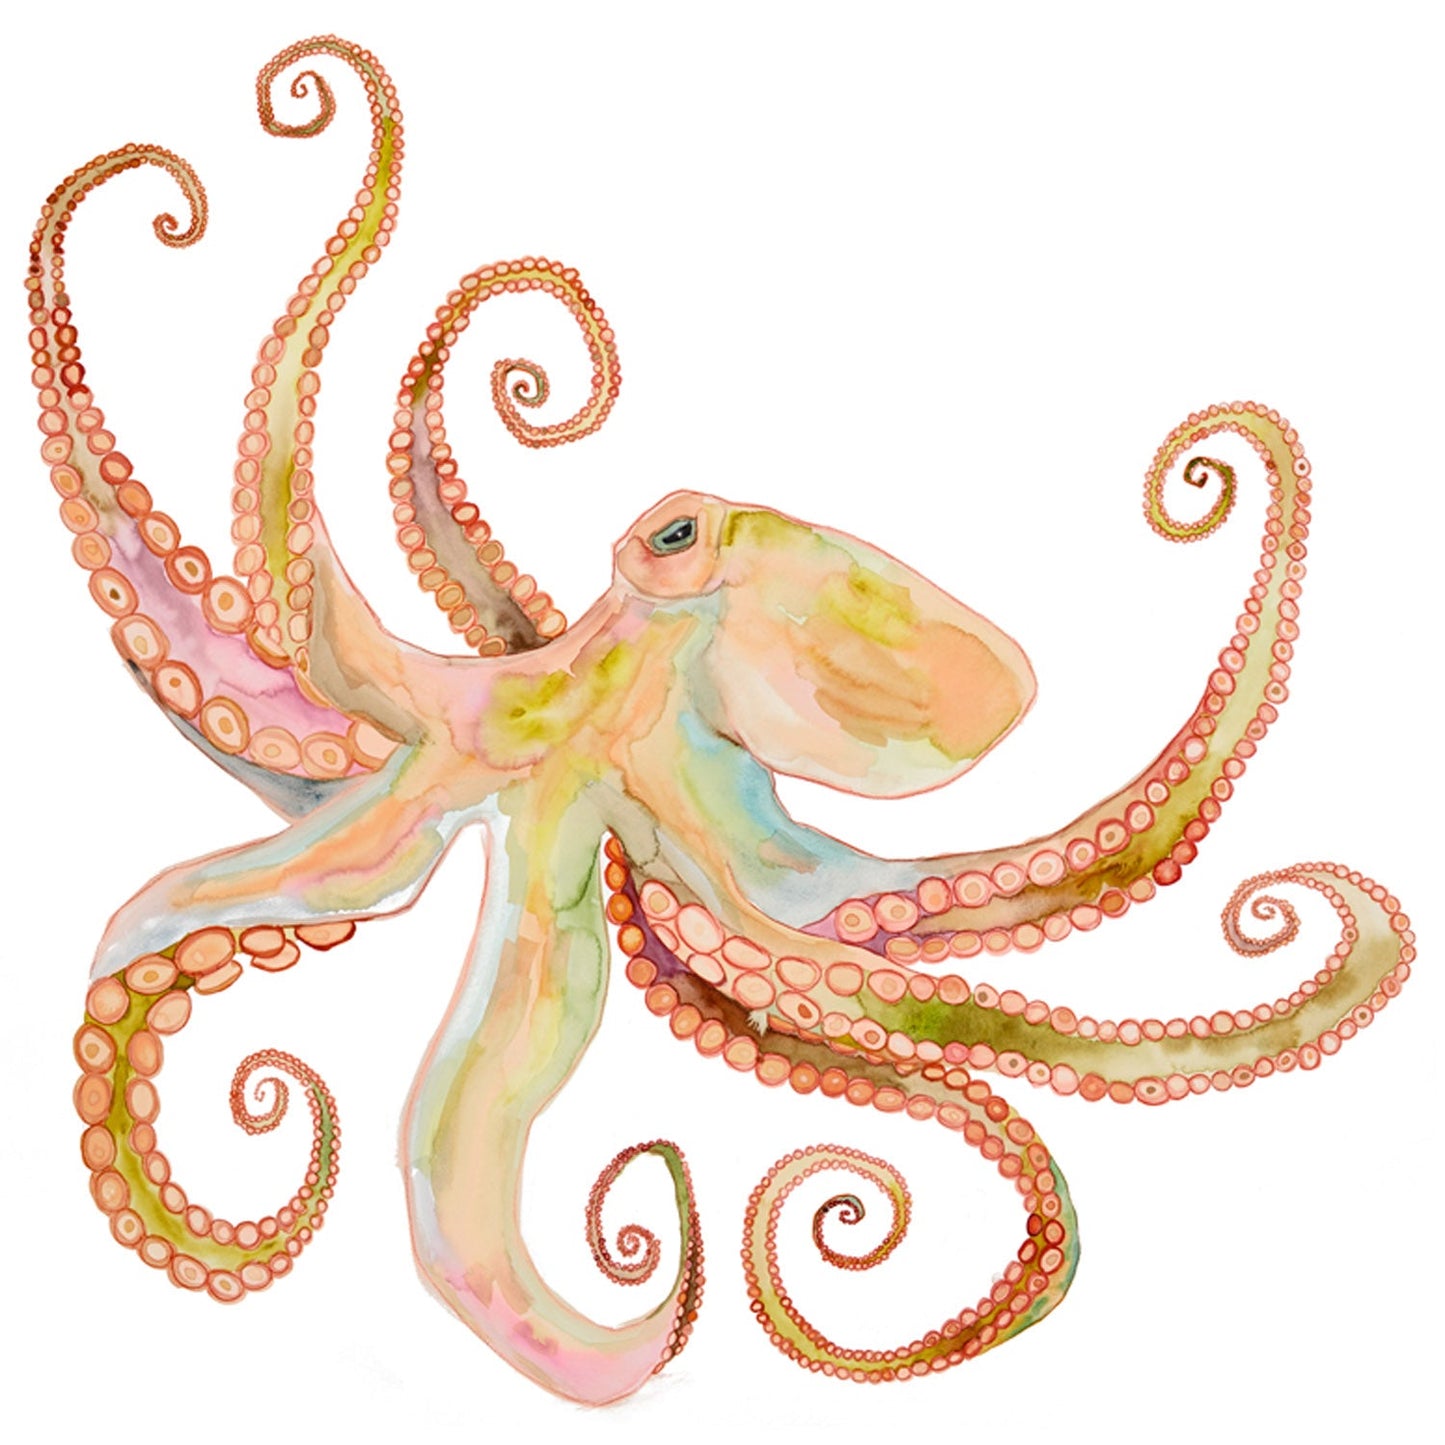 Solo Octopus Canvas Wall Art